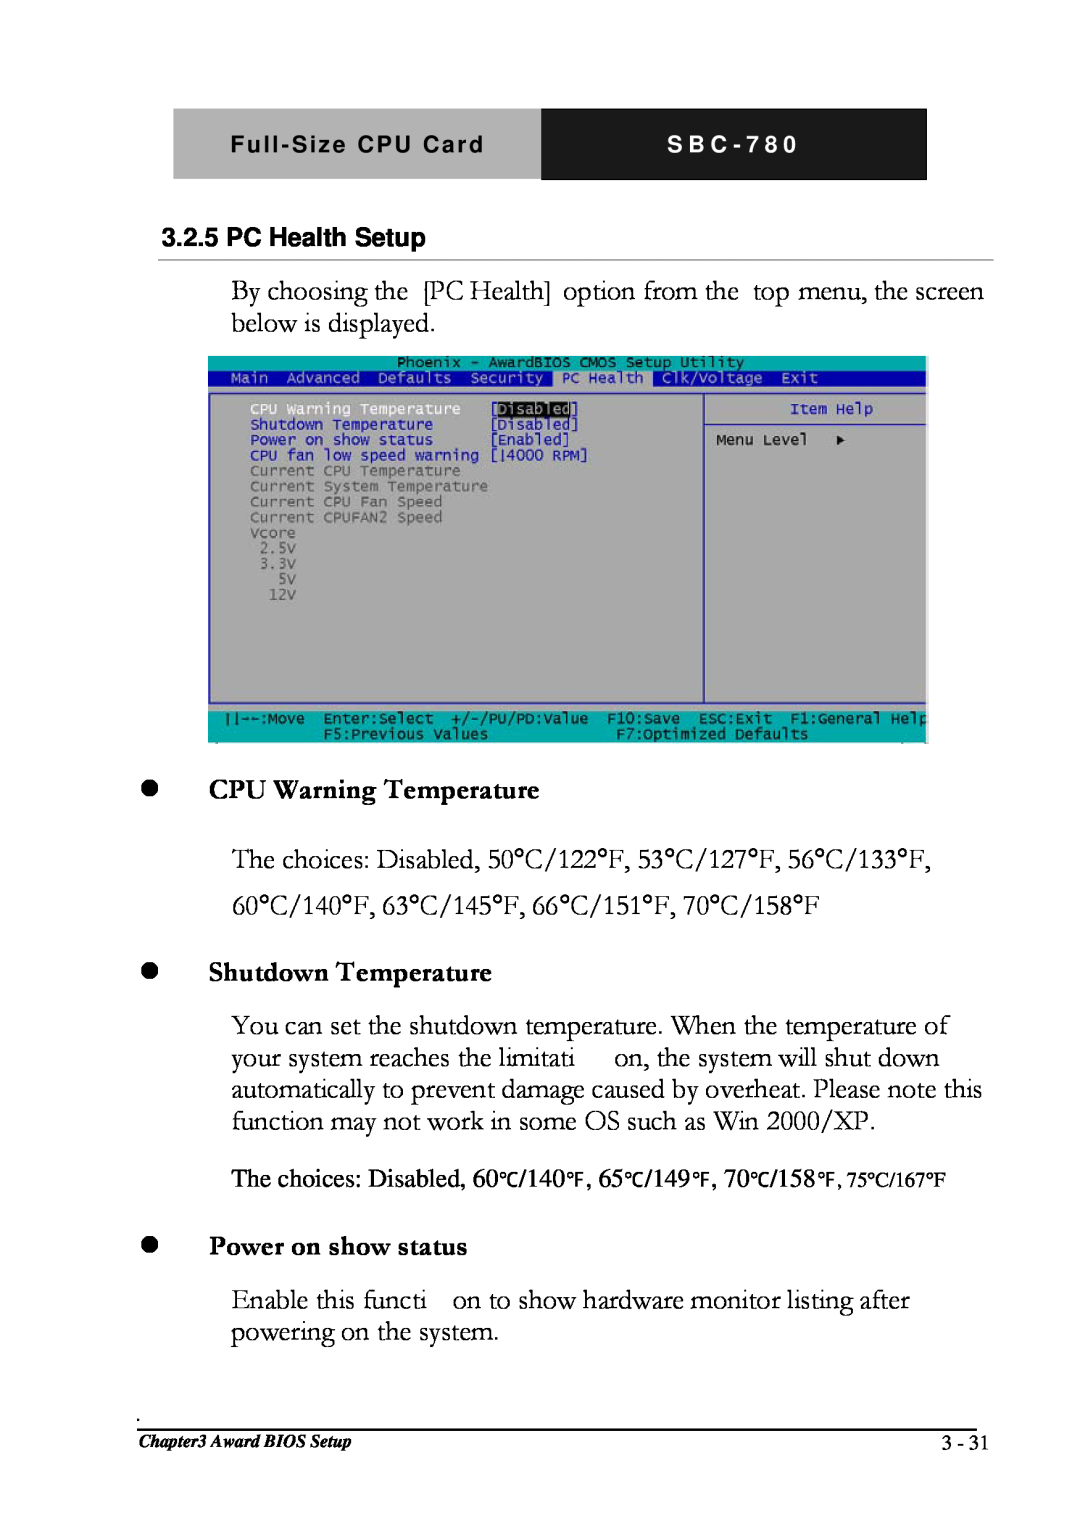 Intel SBC-780 manual CPU Warning Temperature, Shutdown Temperature, Power on show status, PC Health Setup 